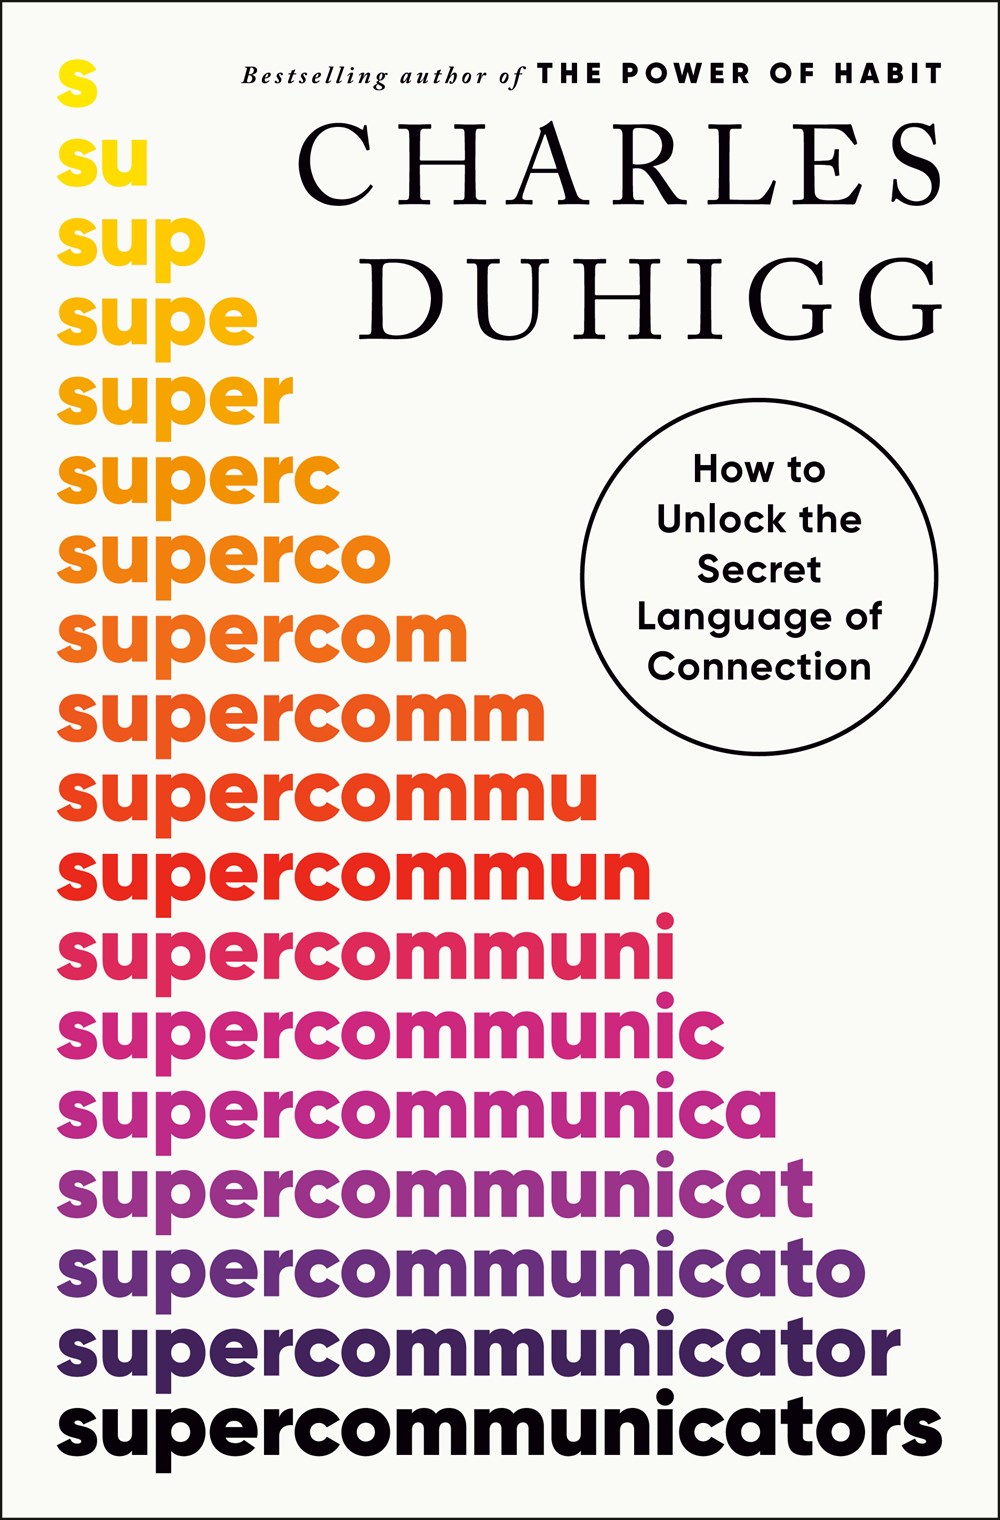 Supercommunicators cover image